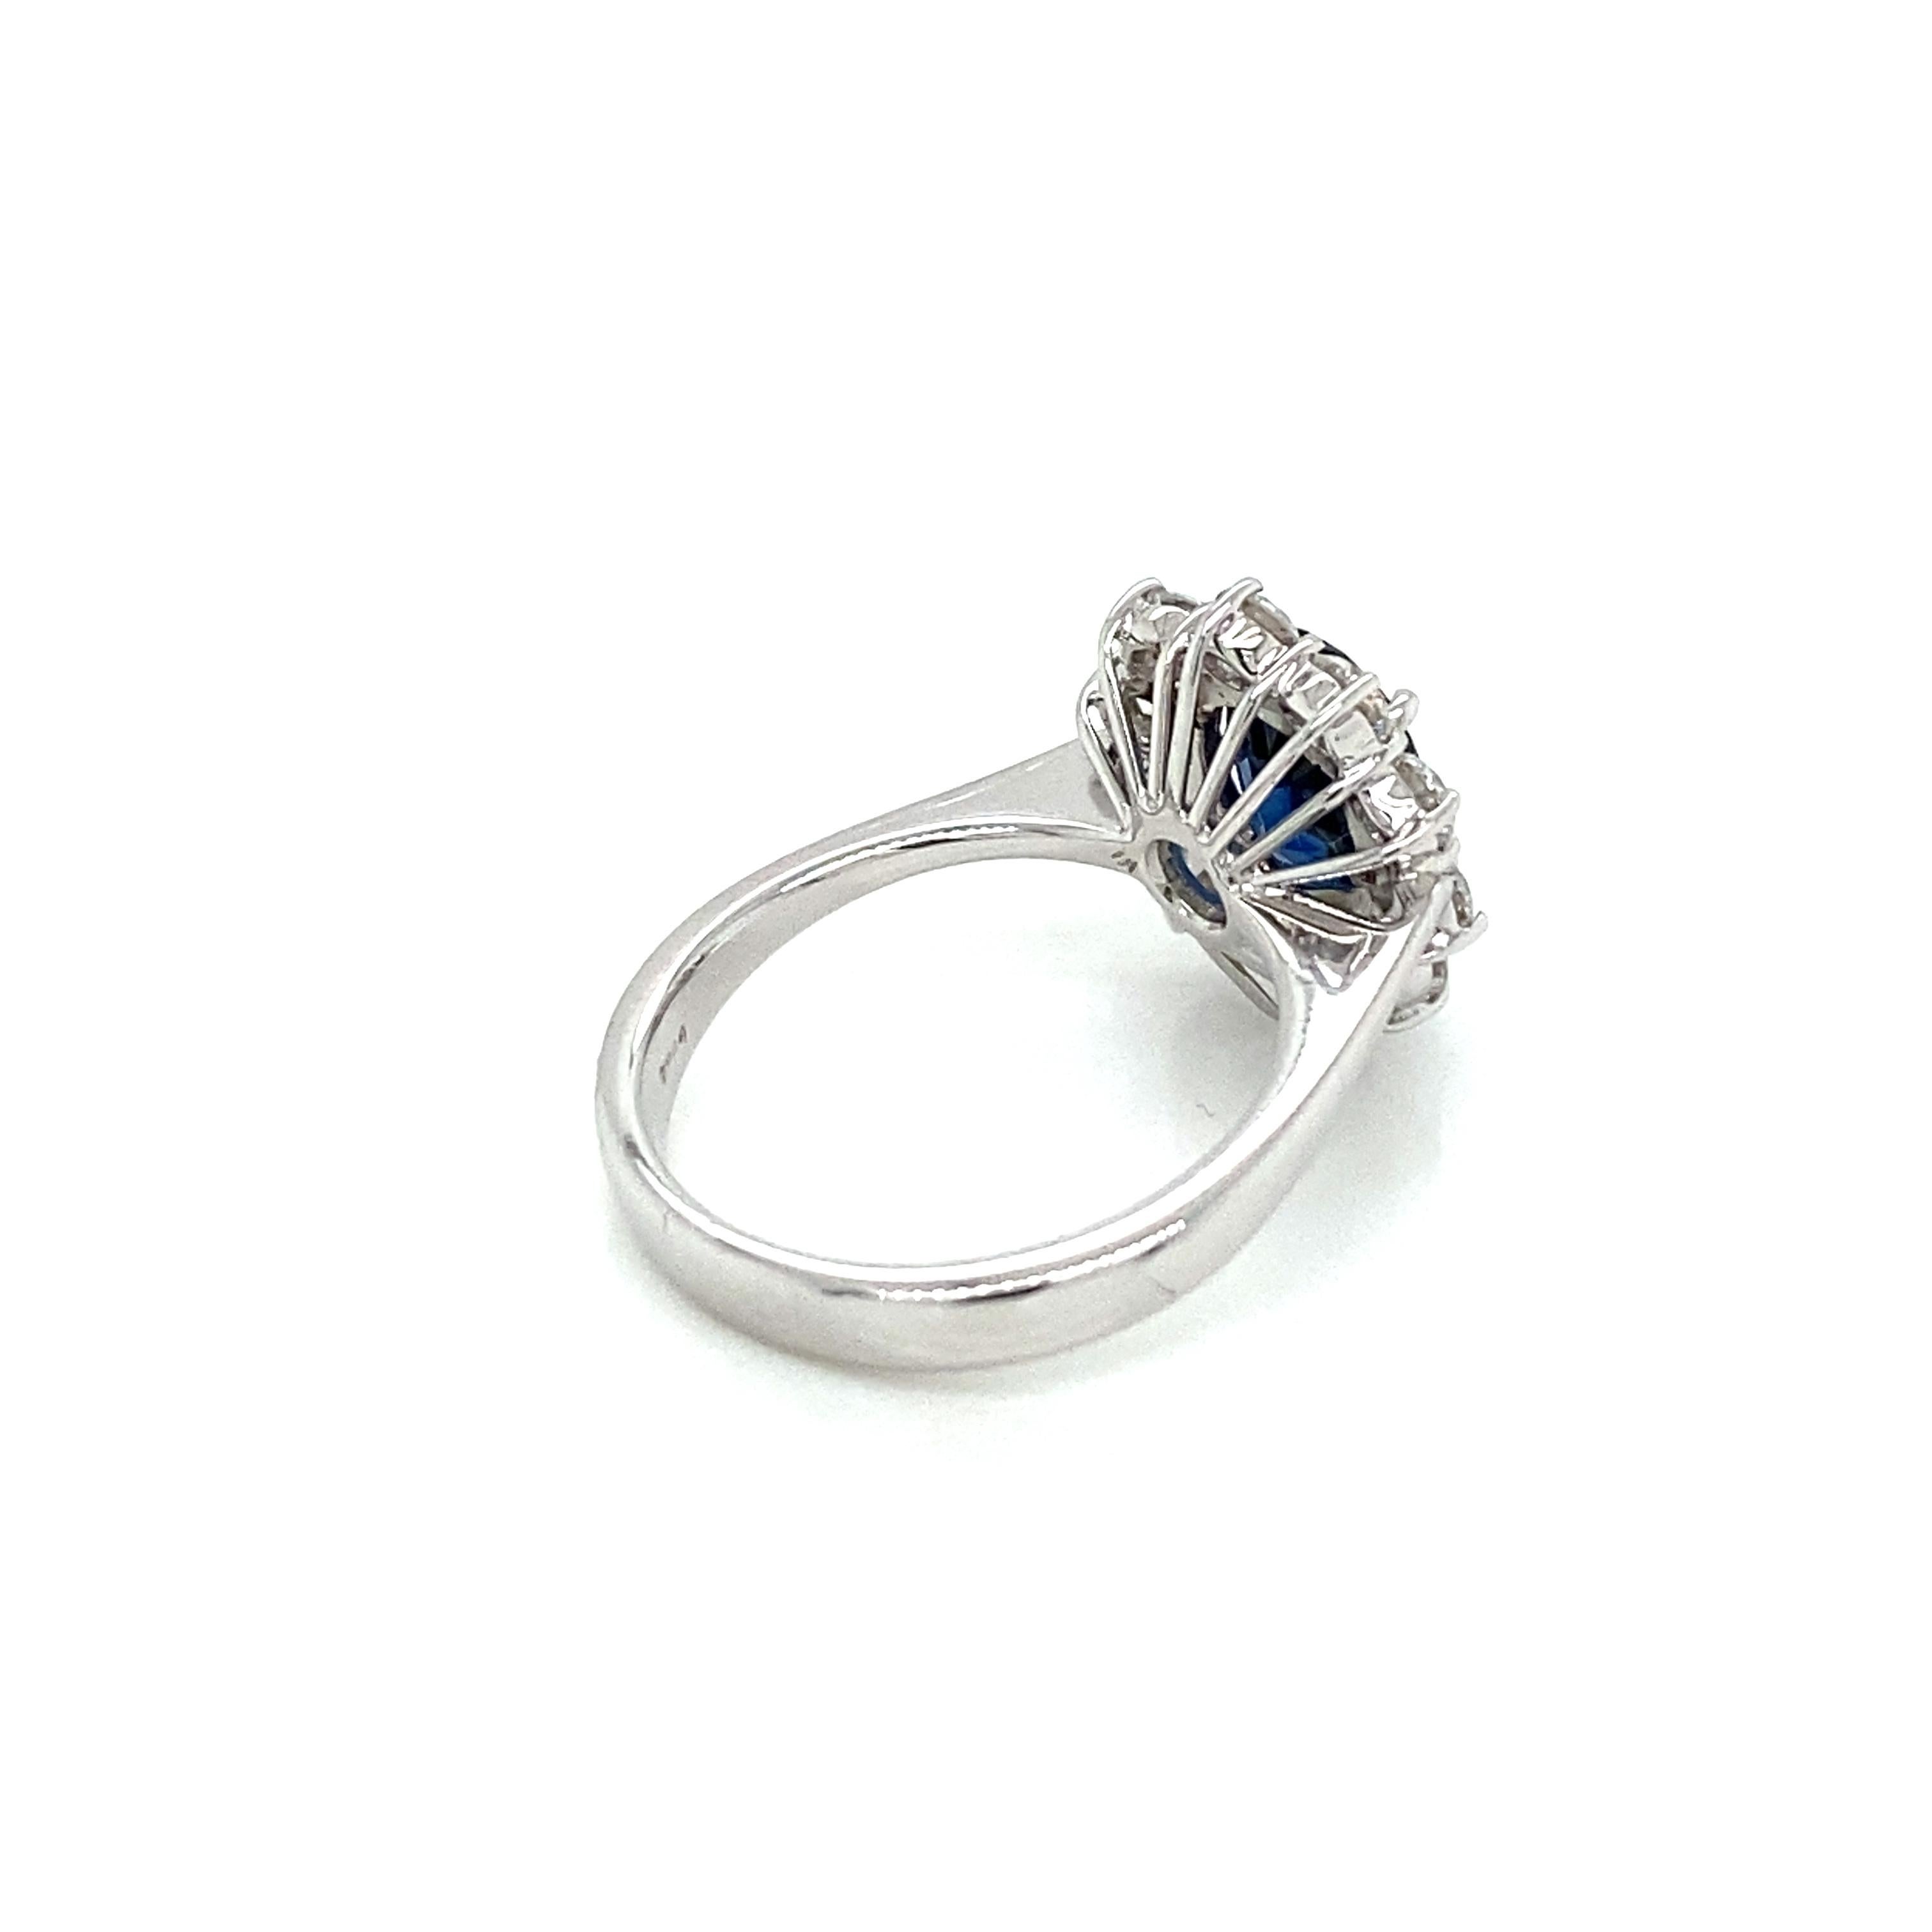 Certified 2.10 Carat Unheated Burma Sapphire Diamond Engagement Ring 5